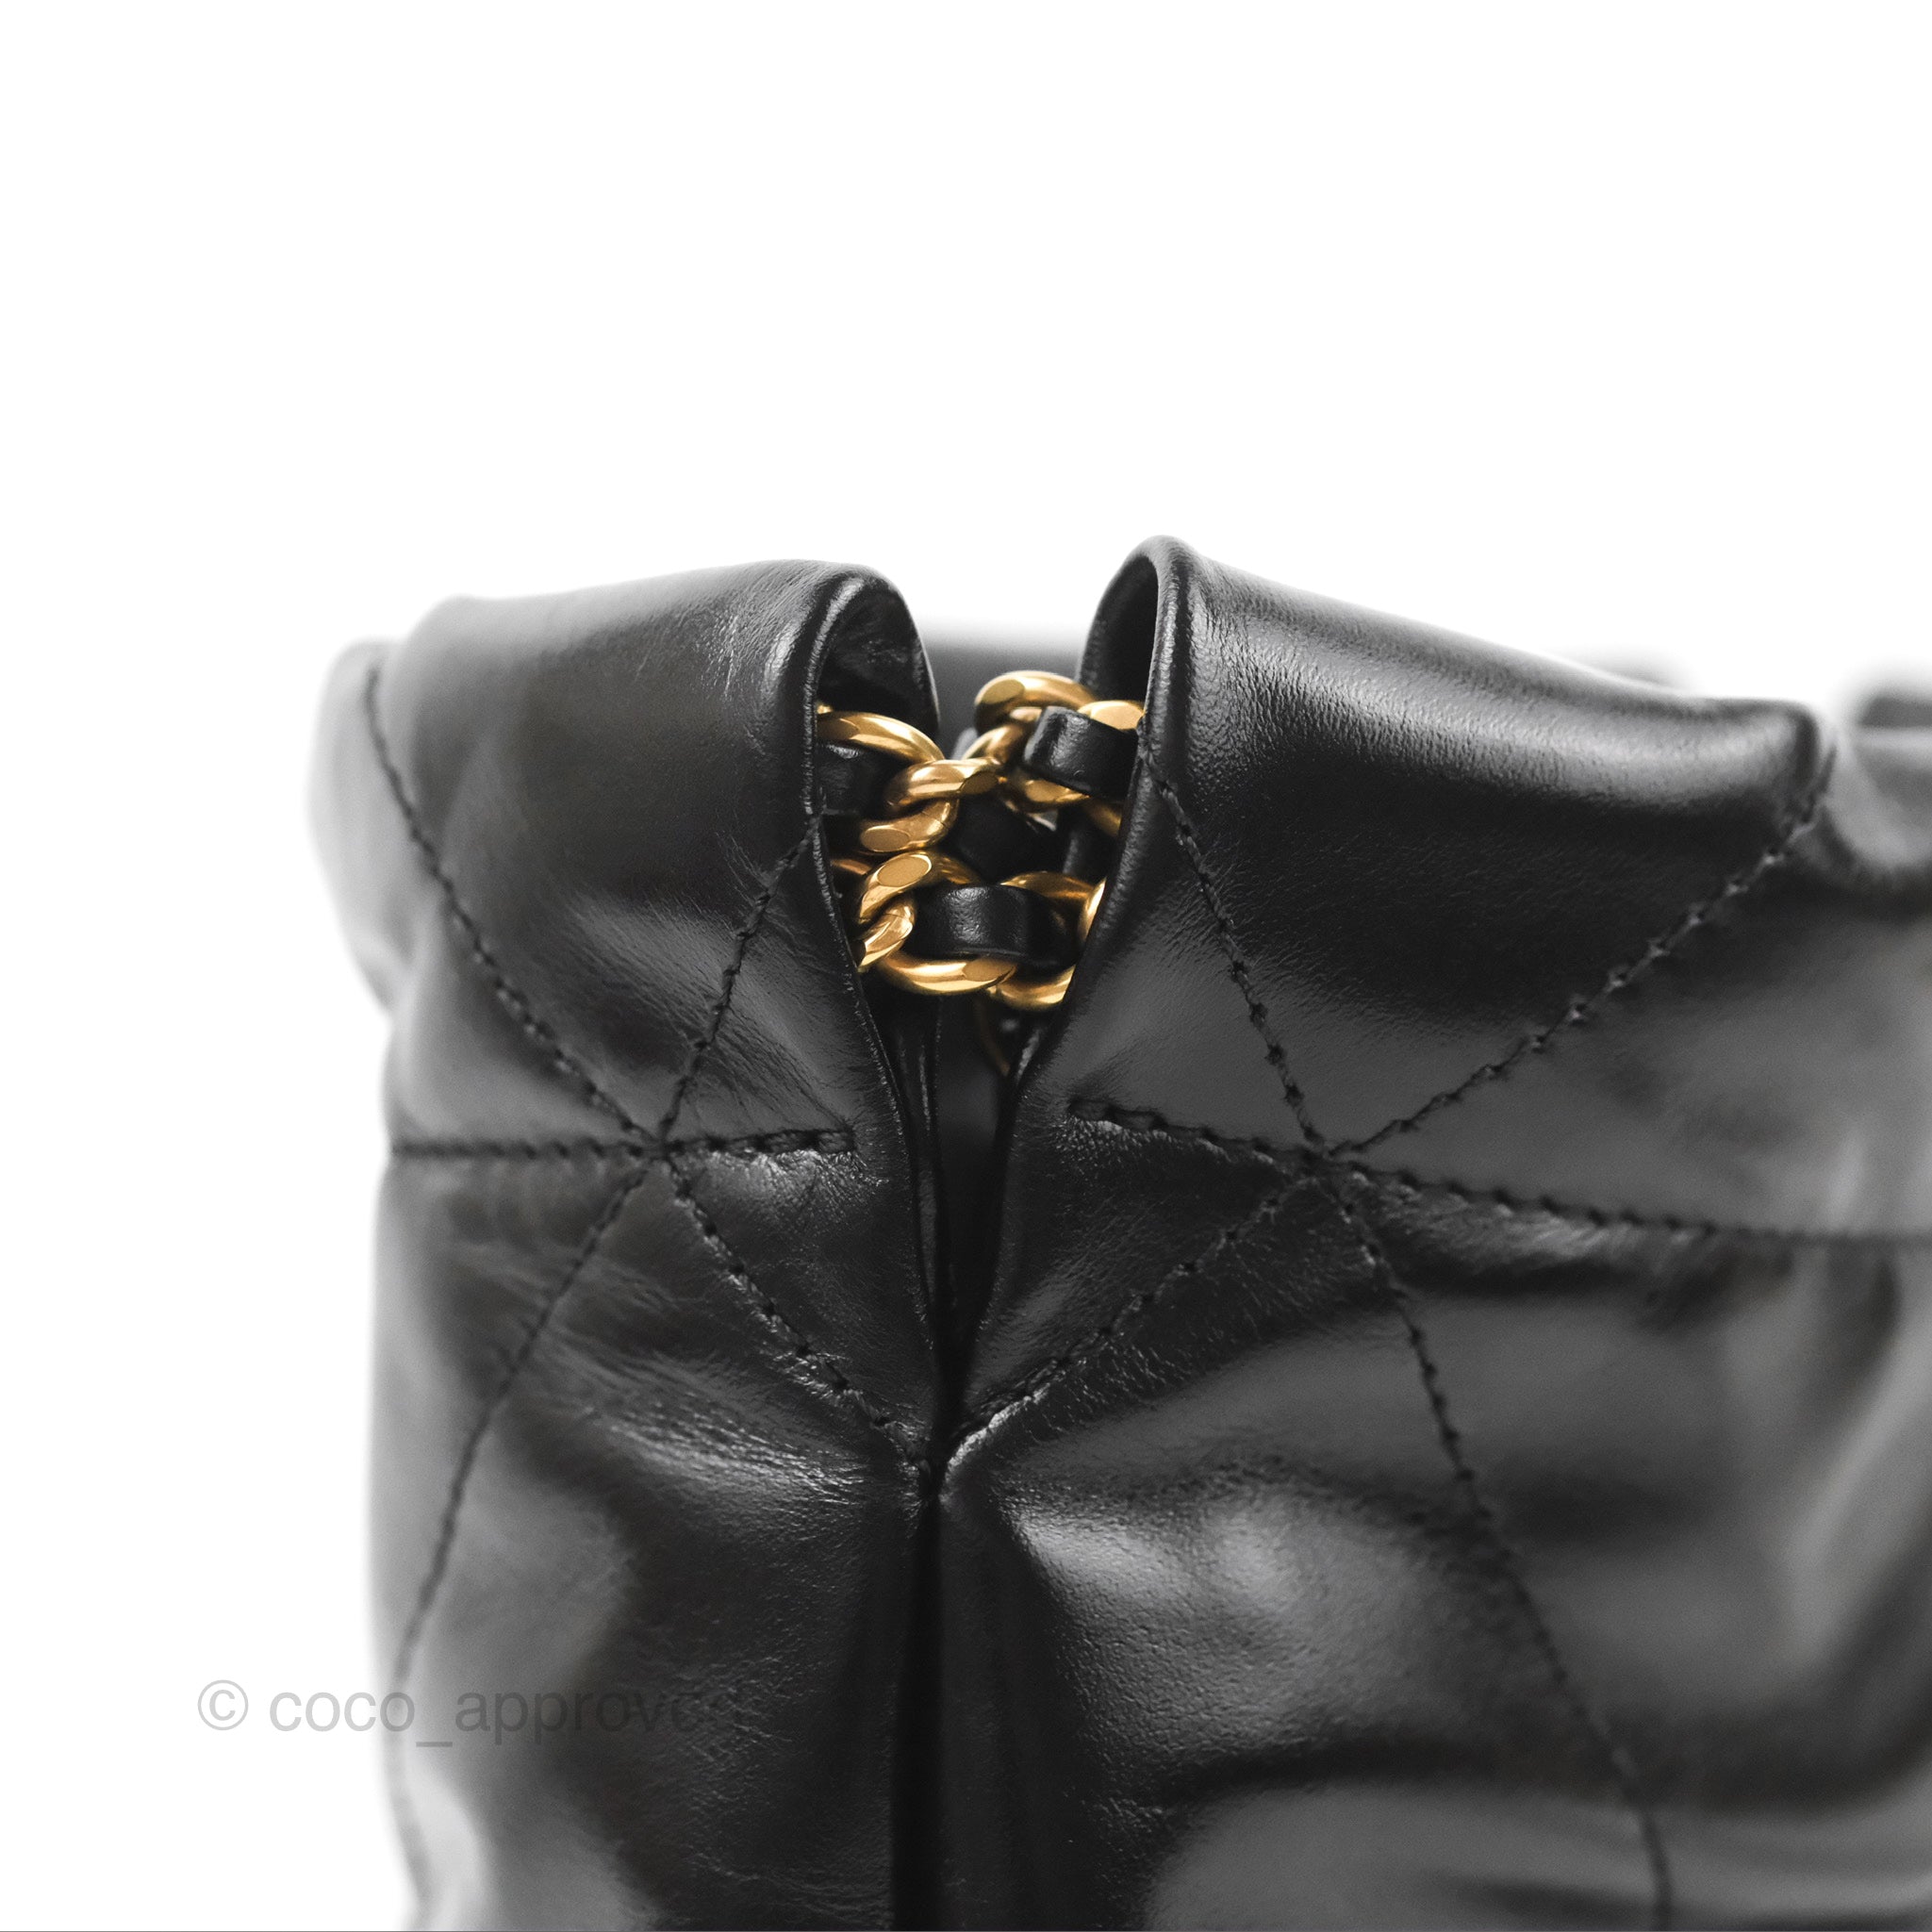 Replica Chanel 22 Large Handbag Shiny Calfskin AS3262 Black